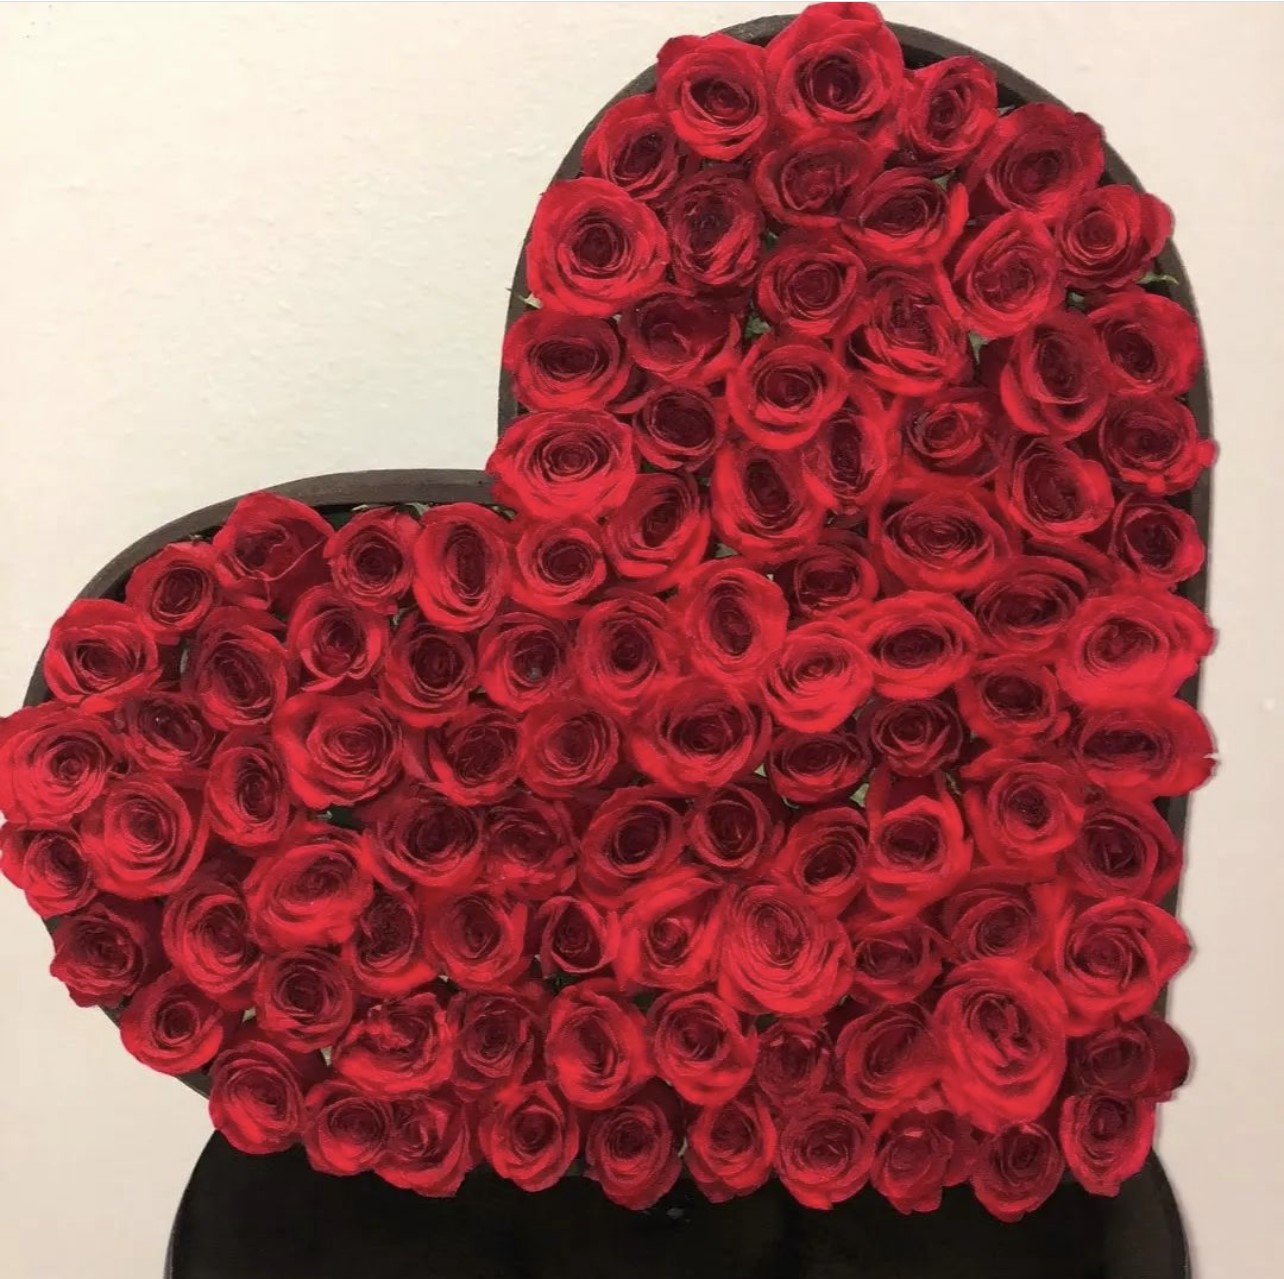 Heartfelt Embrace: Enchanted Roses in a Heart-Shaped Box